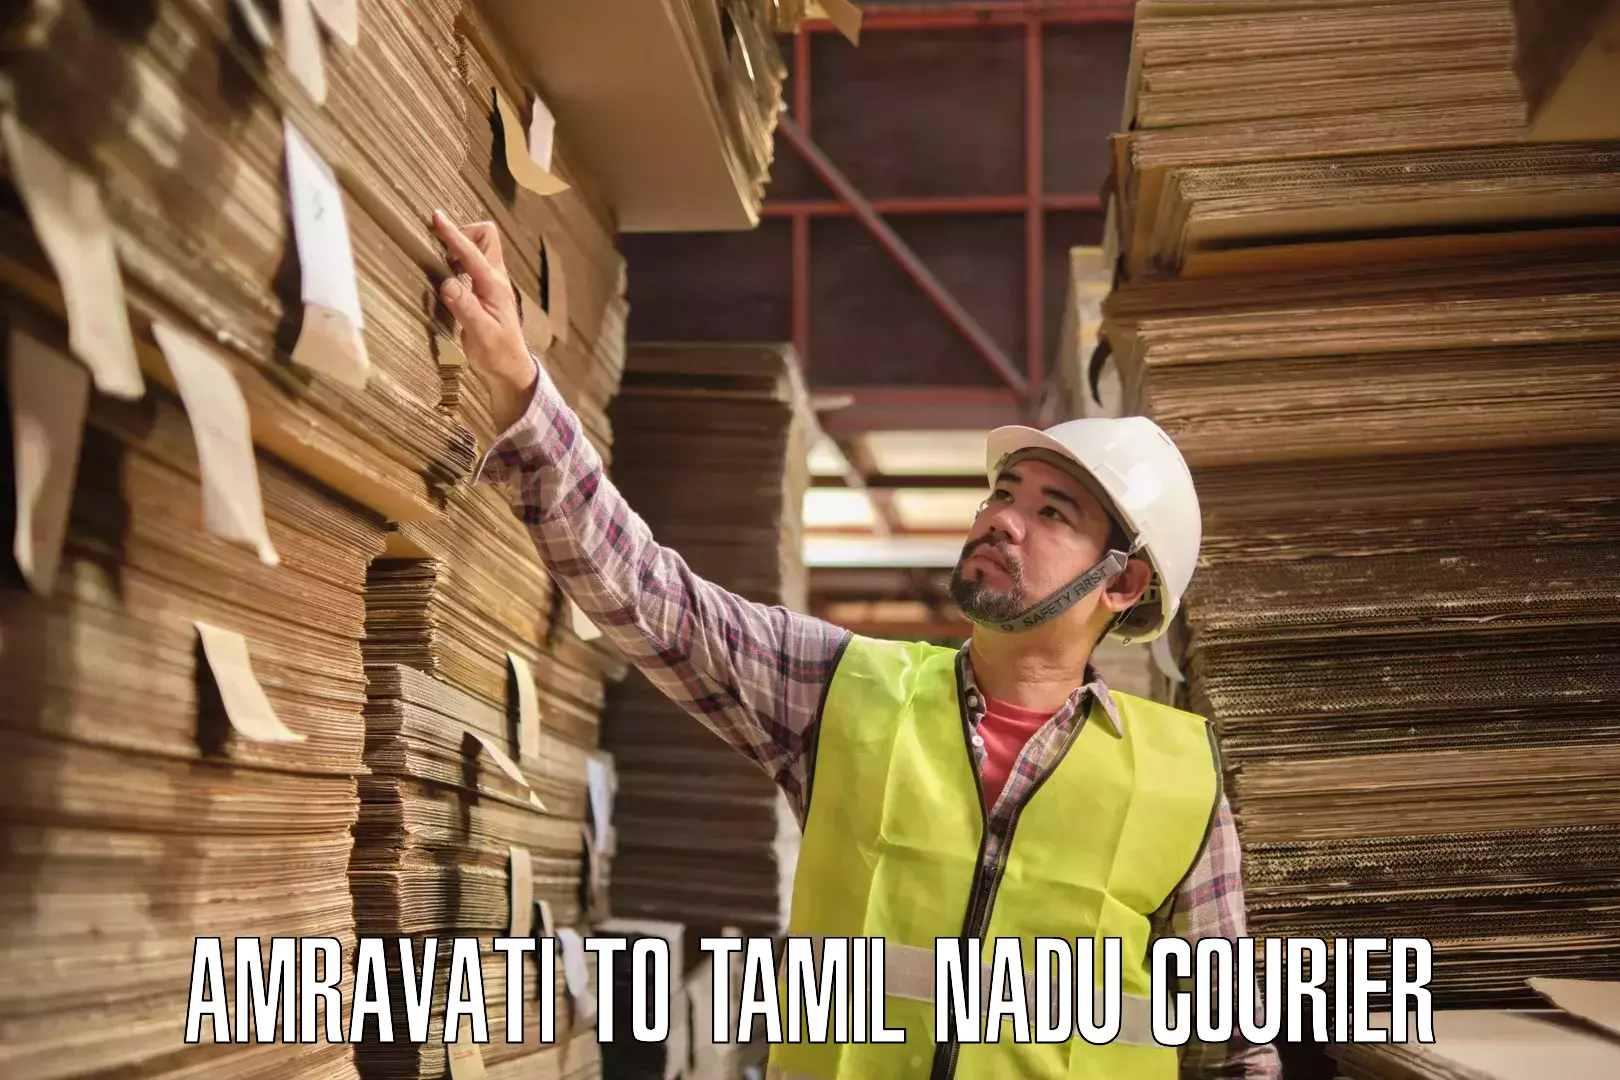 Package delivery network Amravati to Tamil Nadu